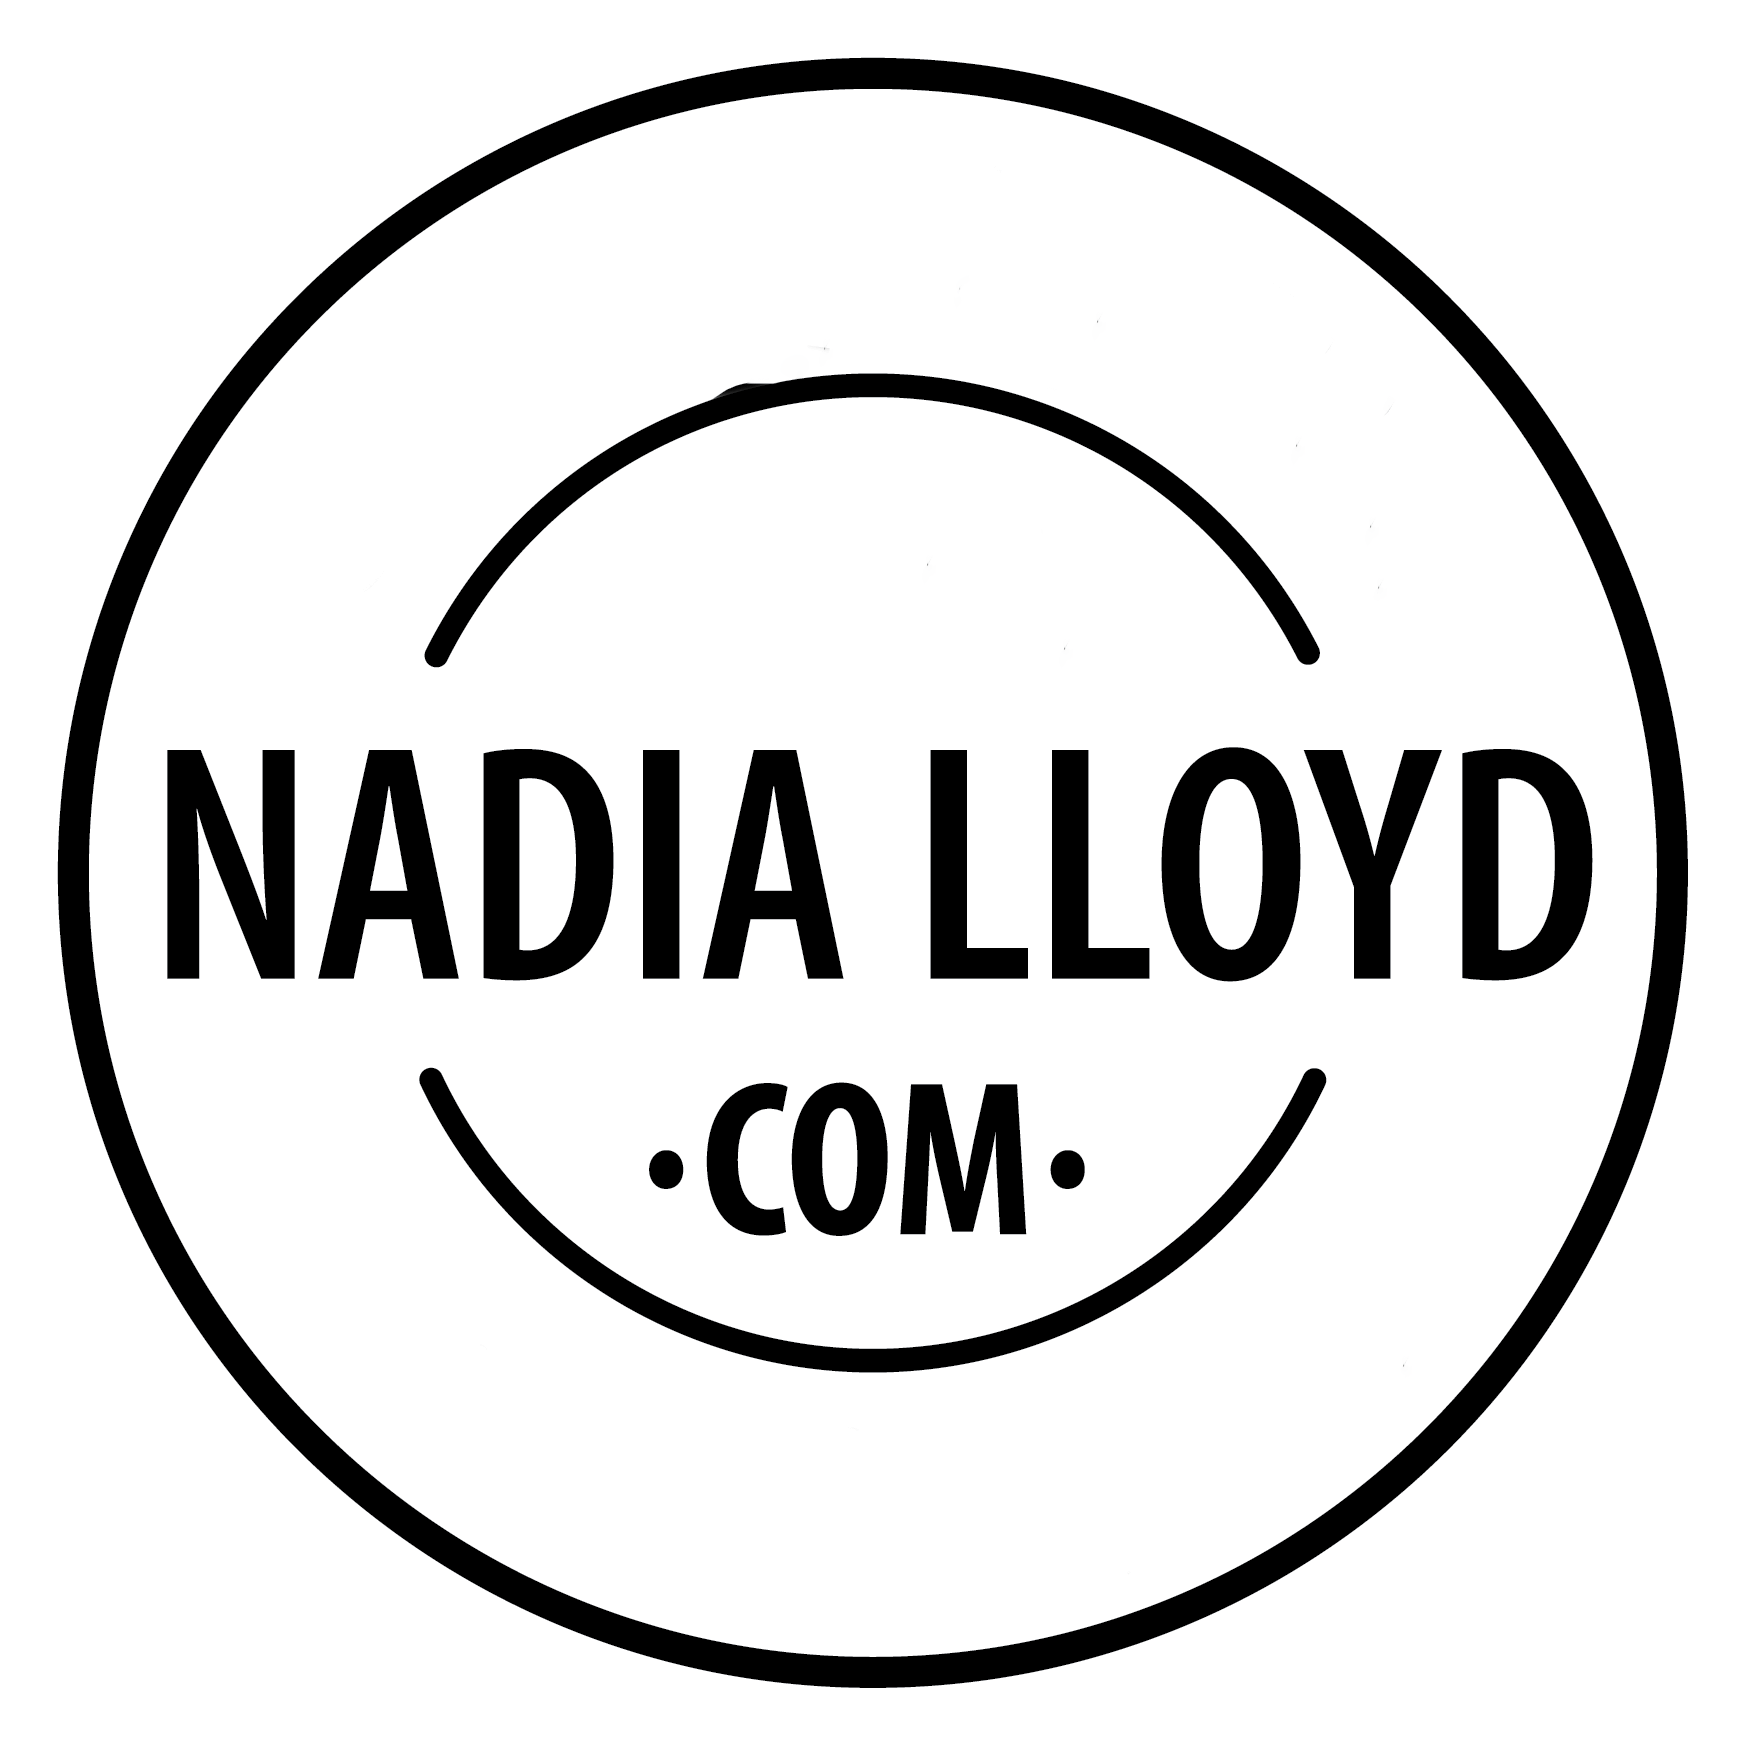 NADIA LLOYD